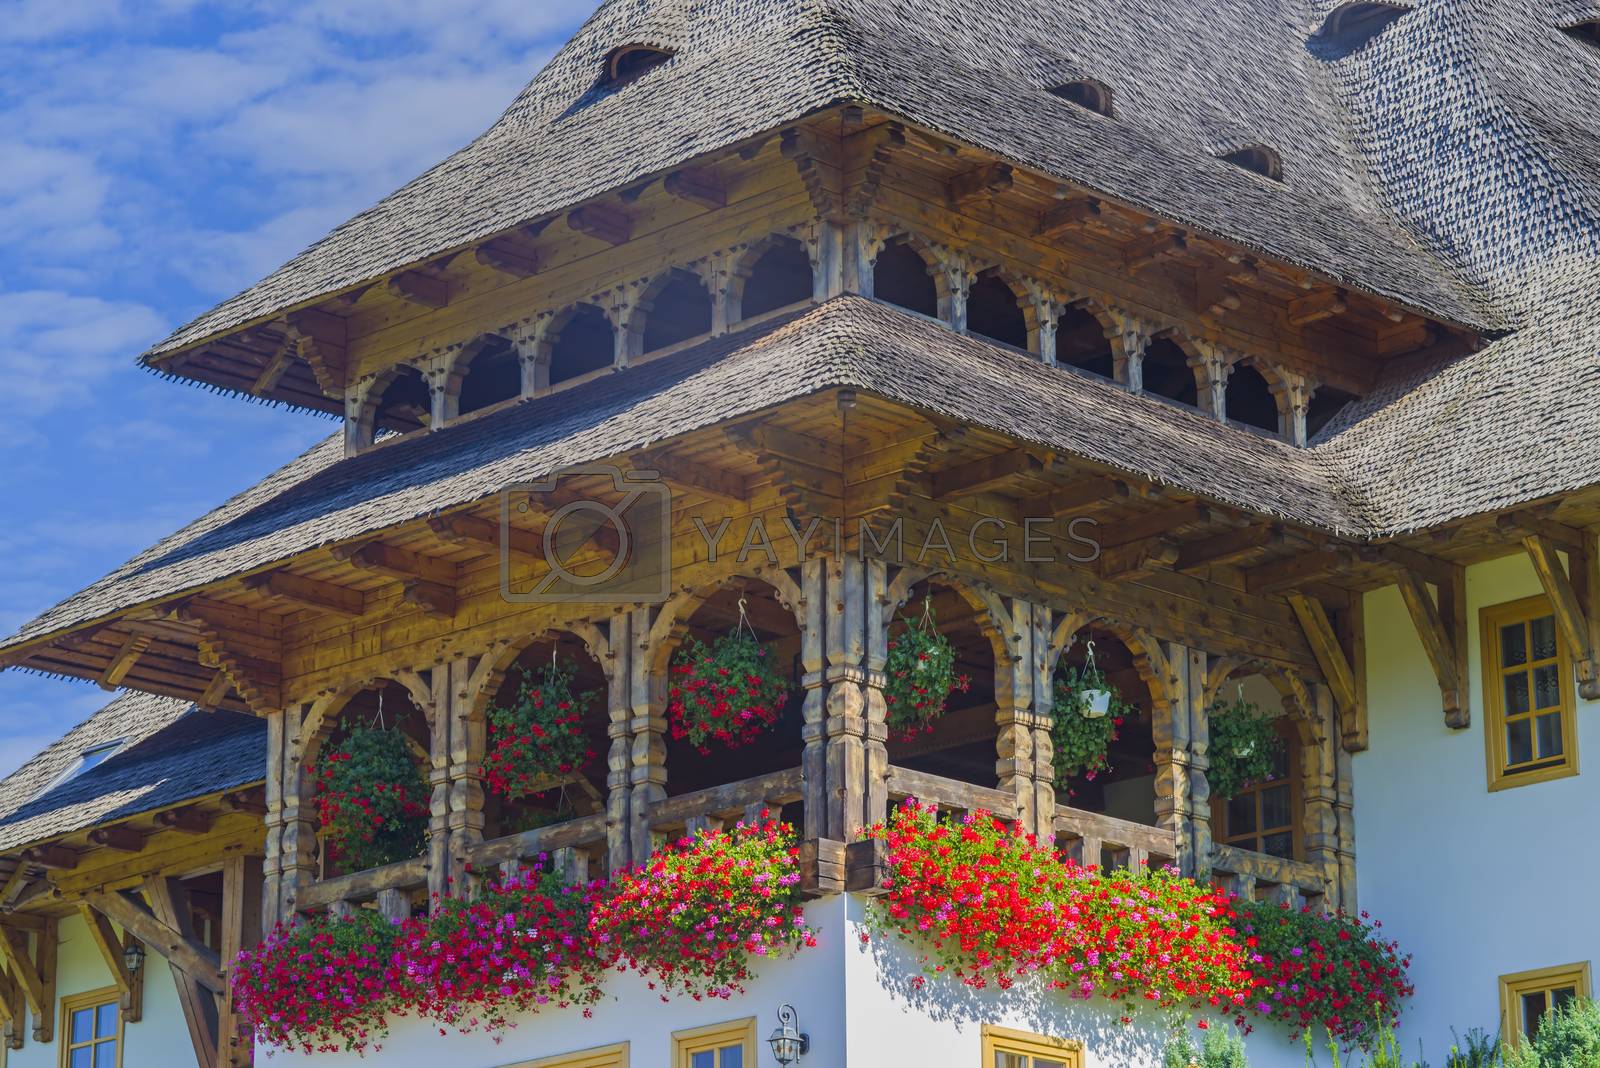 Orthodox Monastery of Barsana in Maramures, Romania; summer flower scene at house entrance